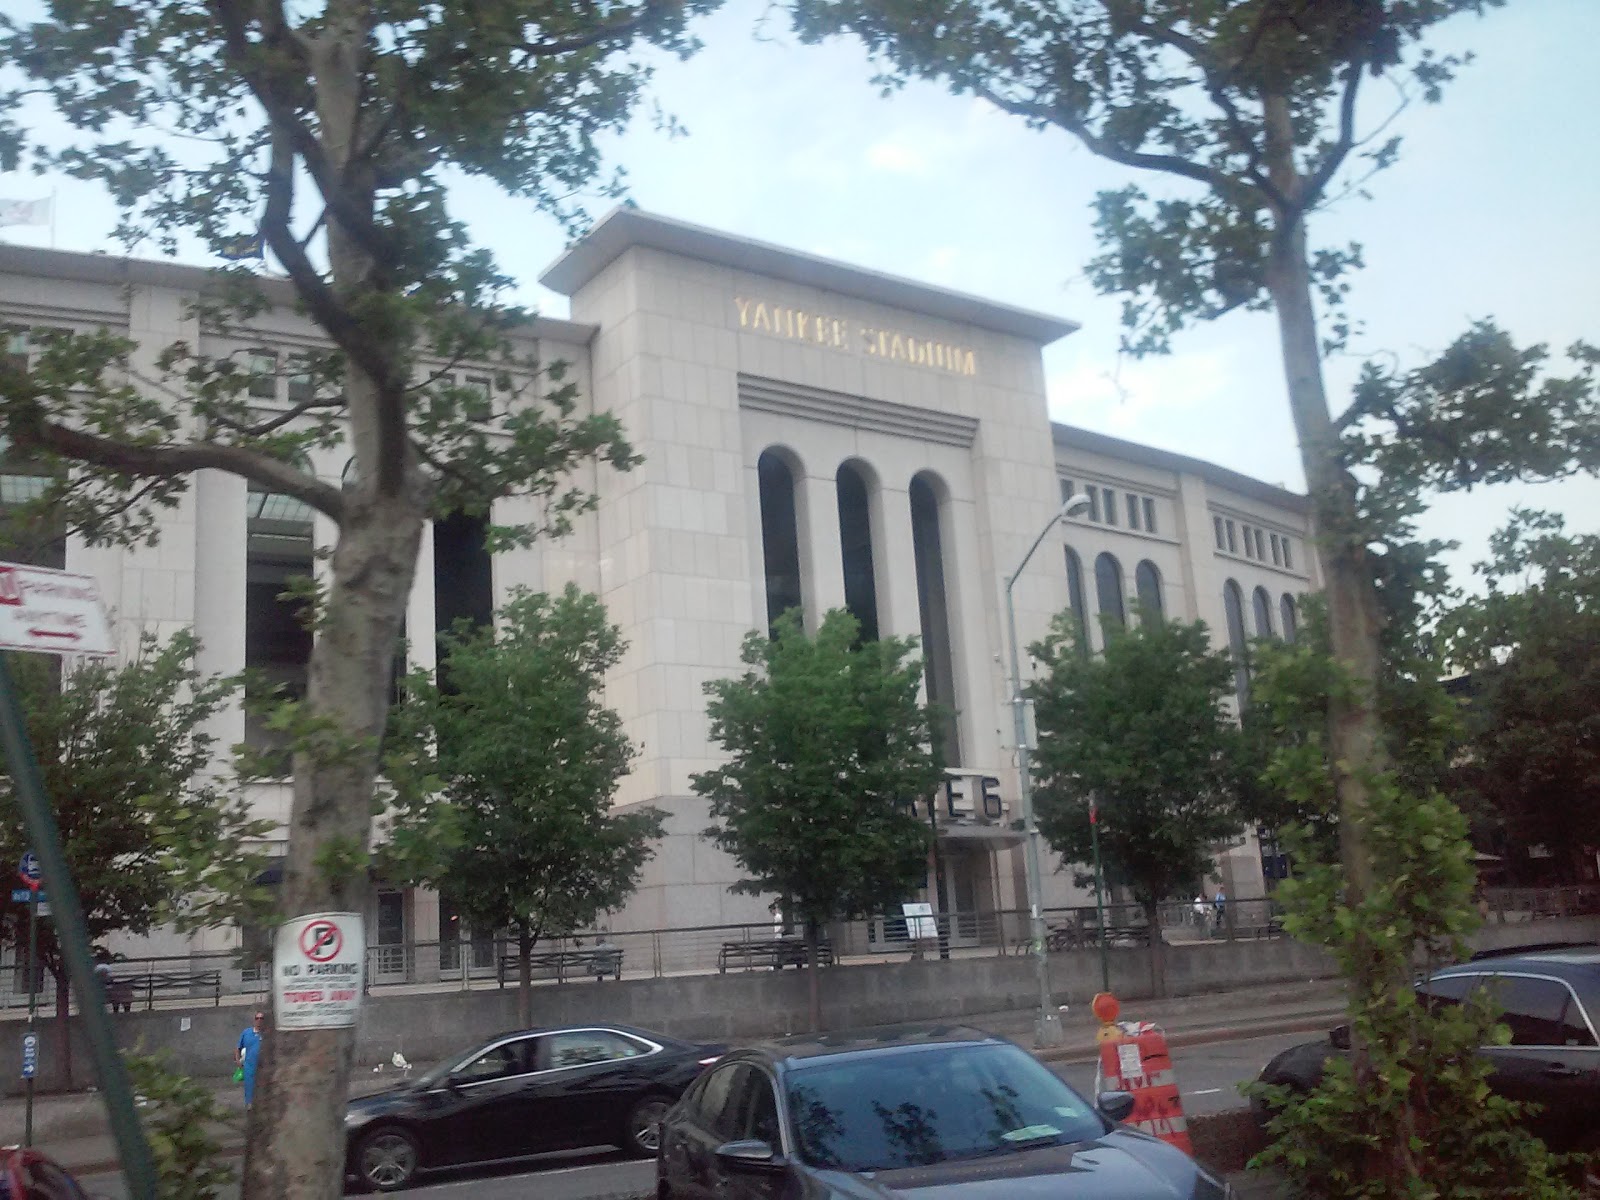 Photo of 161 St - Yankee Stadium in New York City, New York, United States - 4 Picture of Point of interest, Establishment, Transit station, Subway station